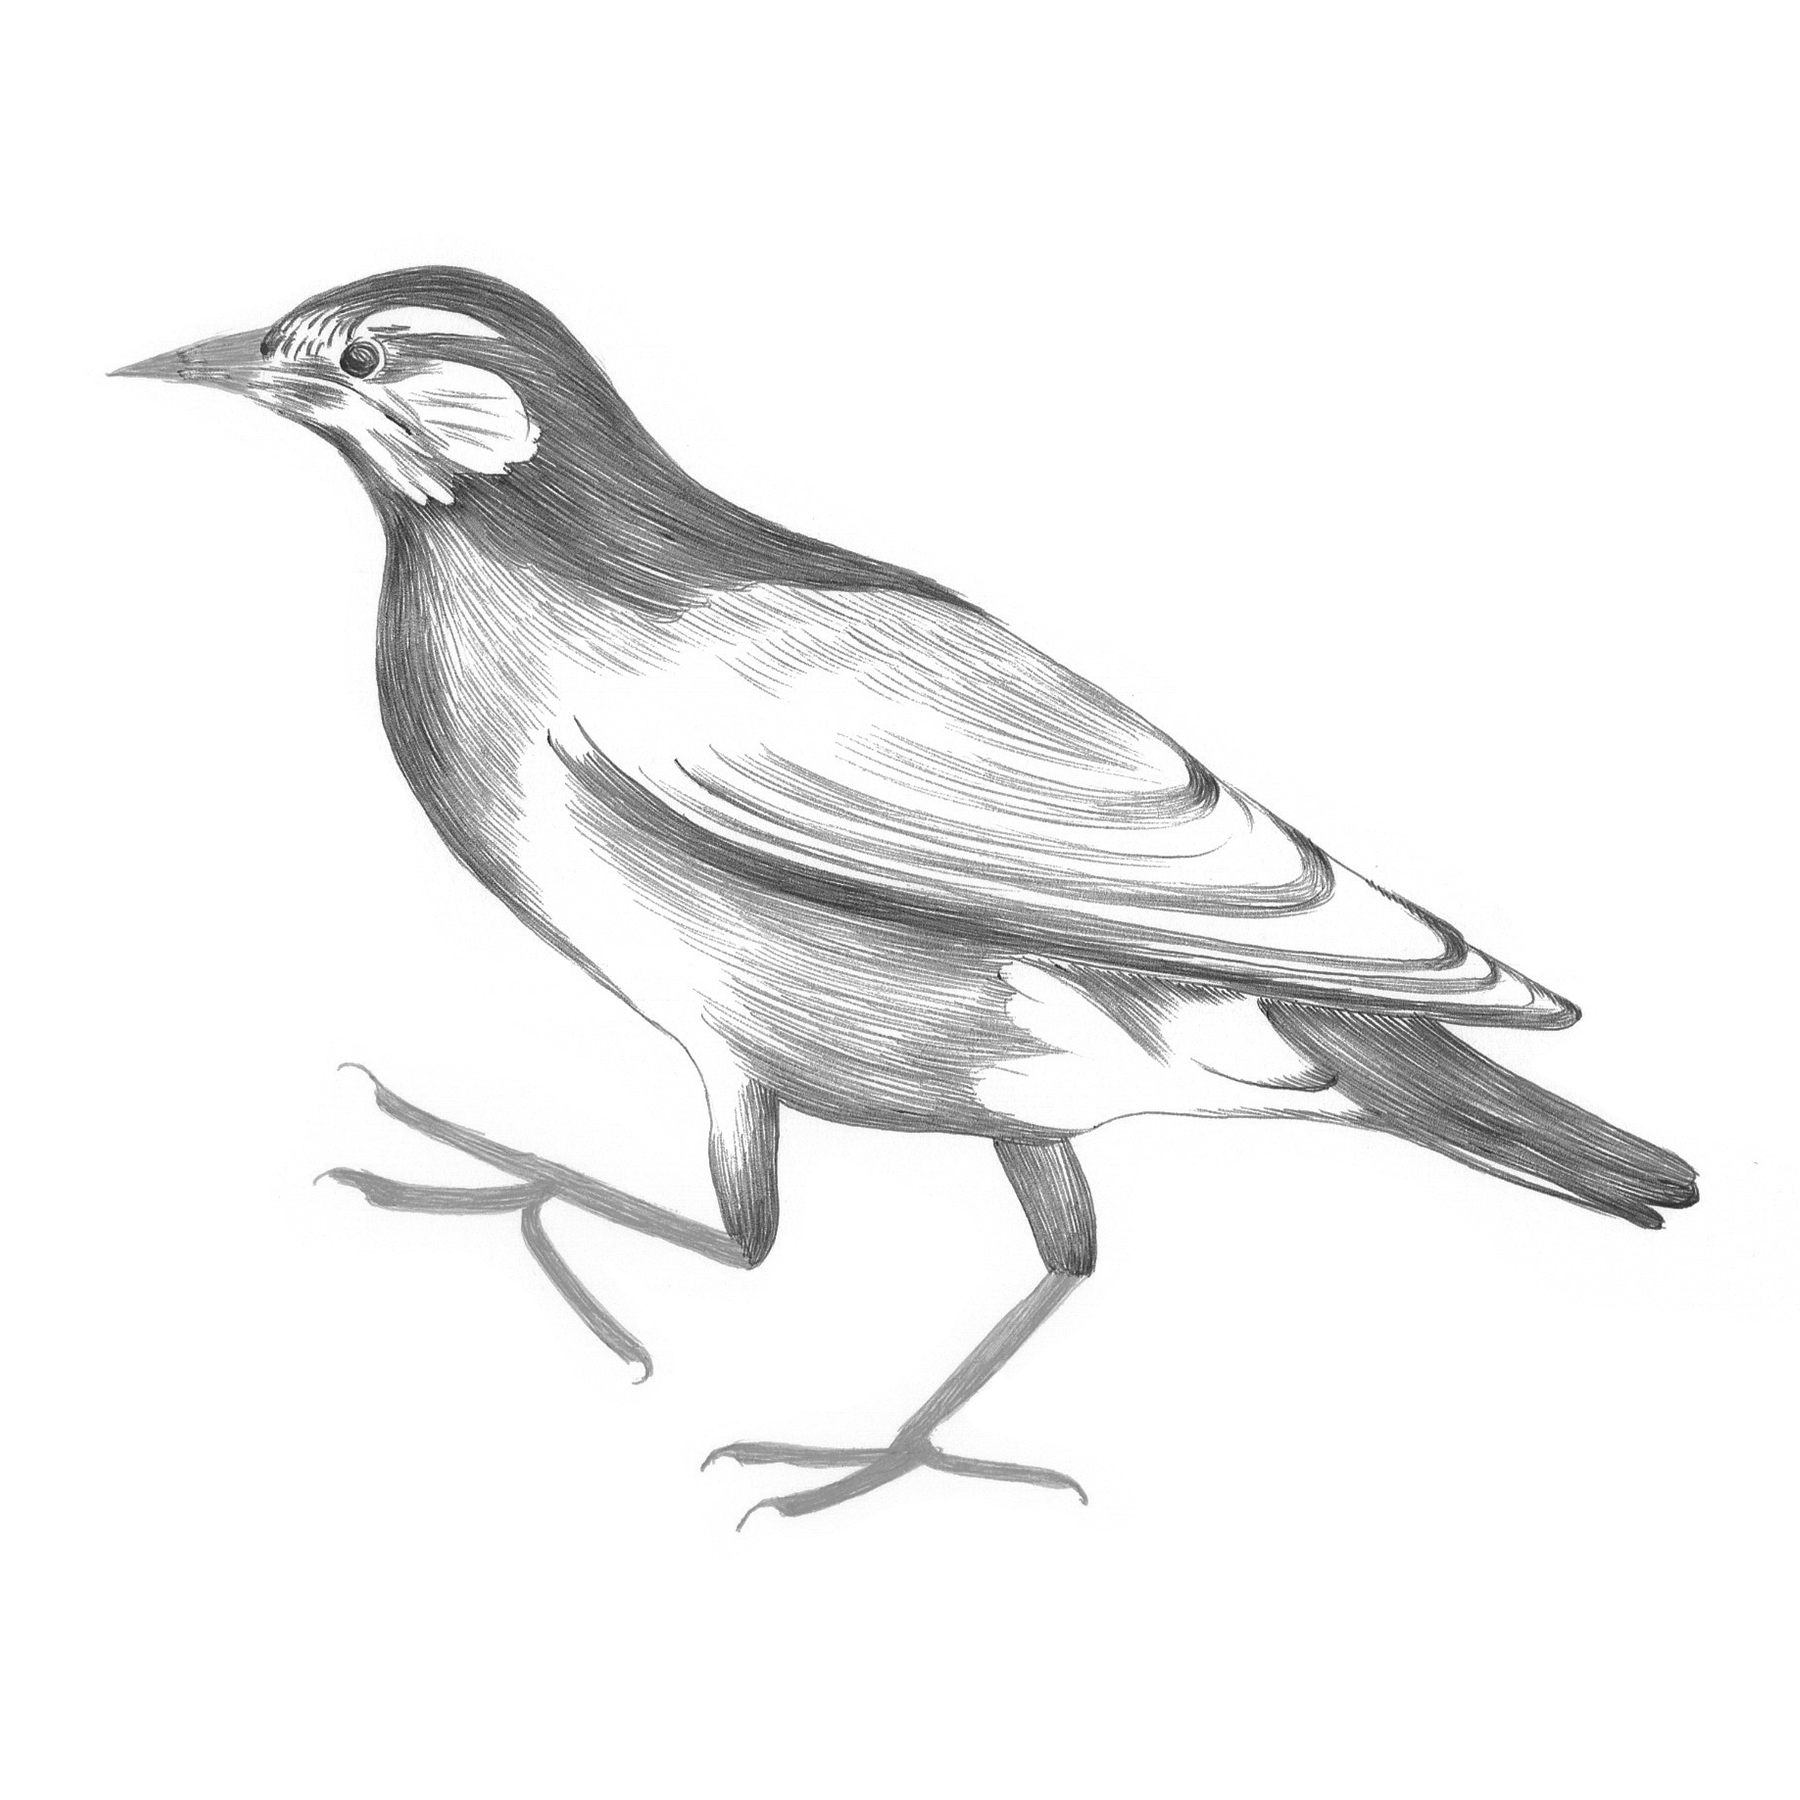 White-cheeked Starling